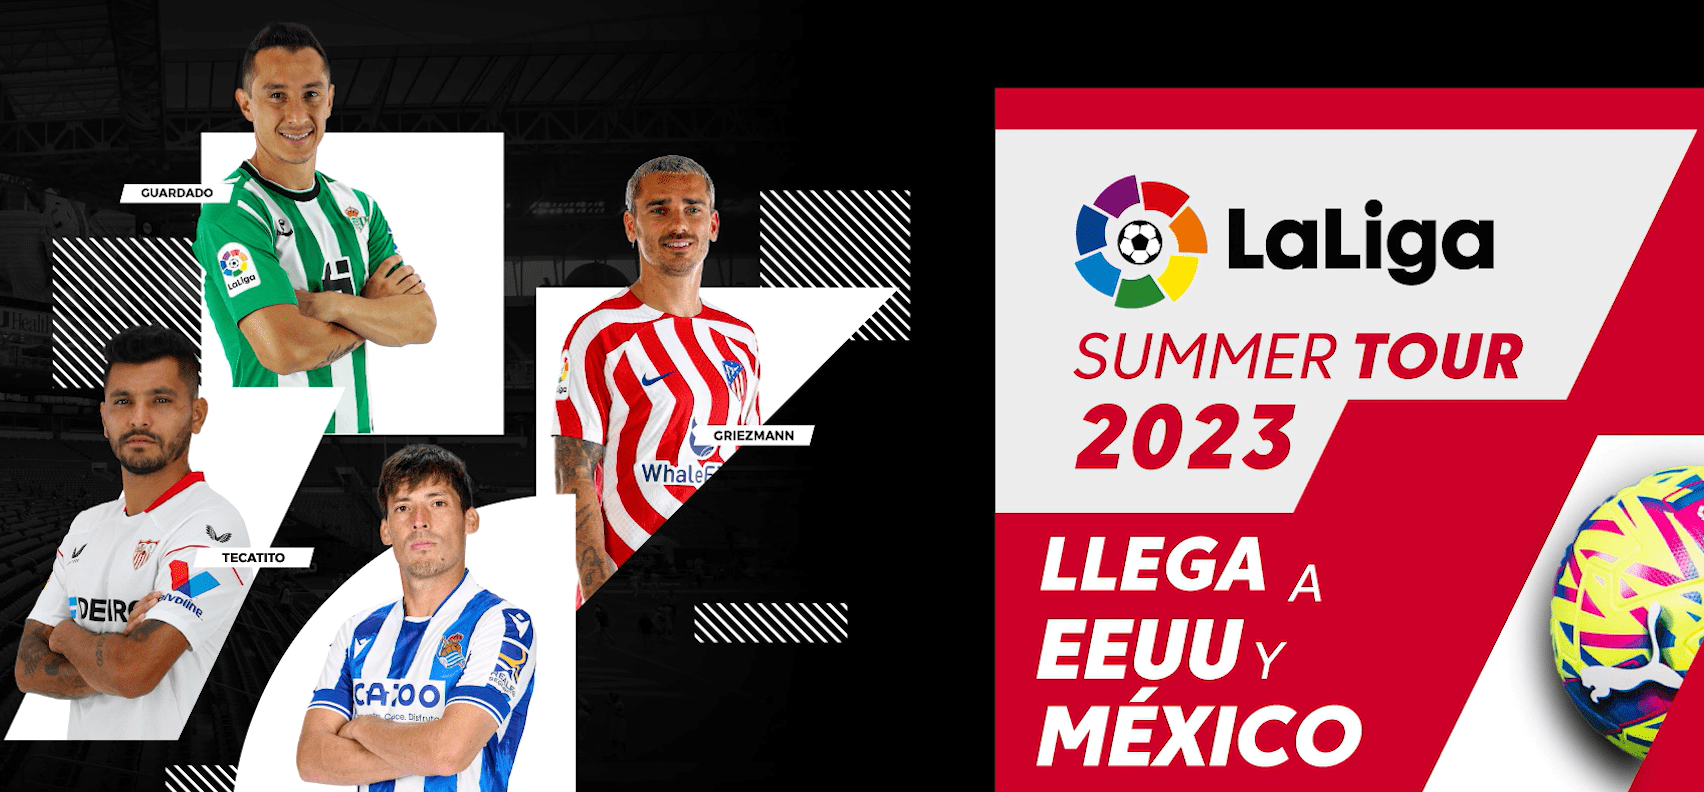 "LaLiga Summer Tour" estos equipos españoles jugarán en México